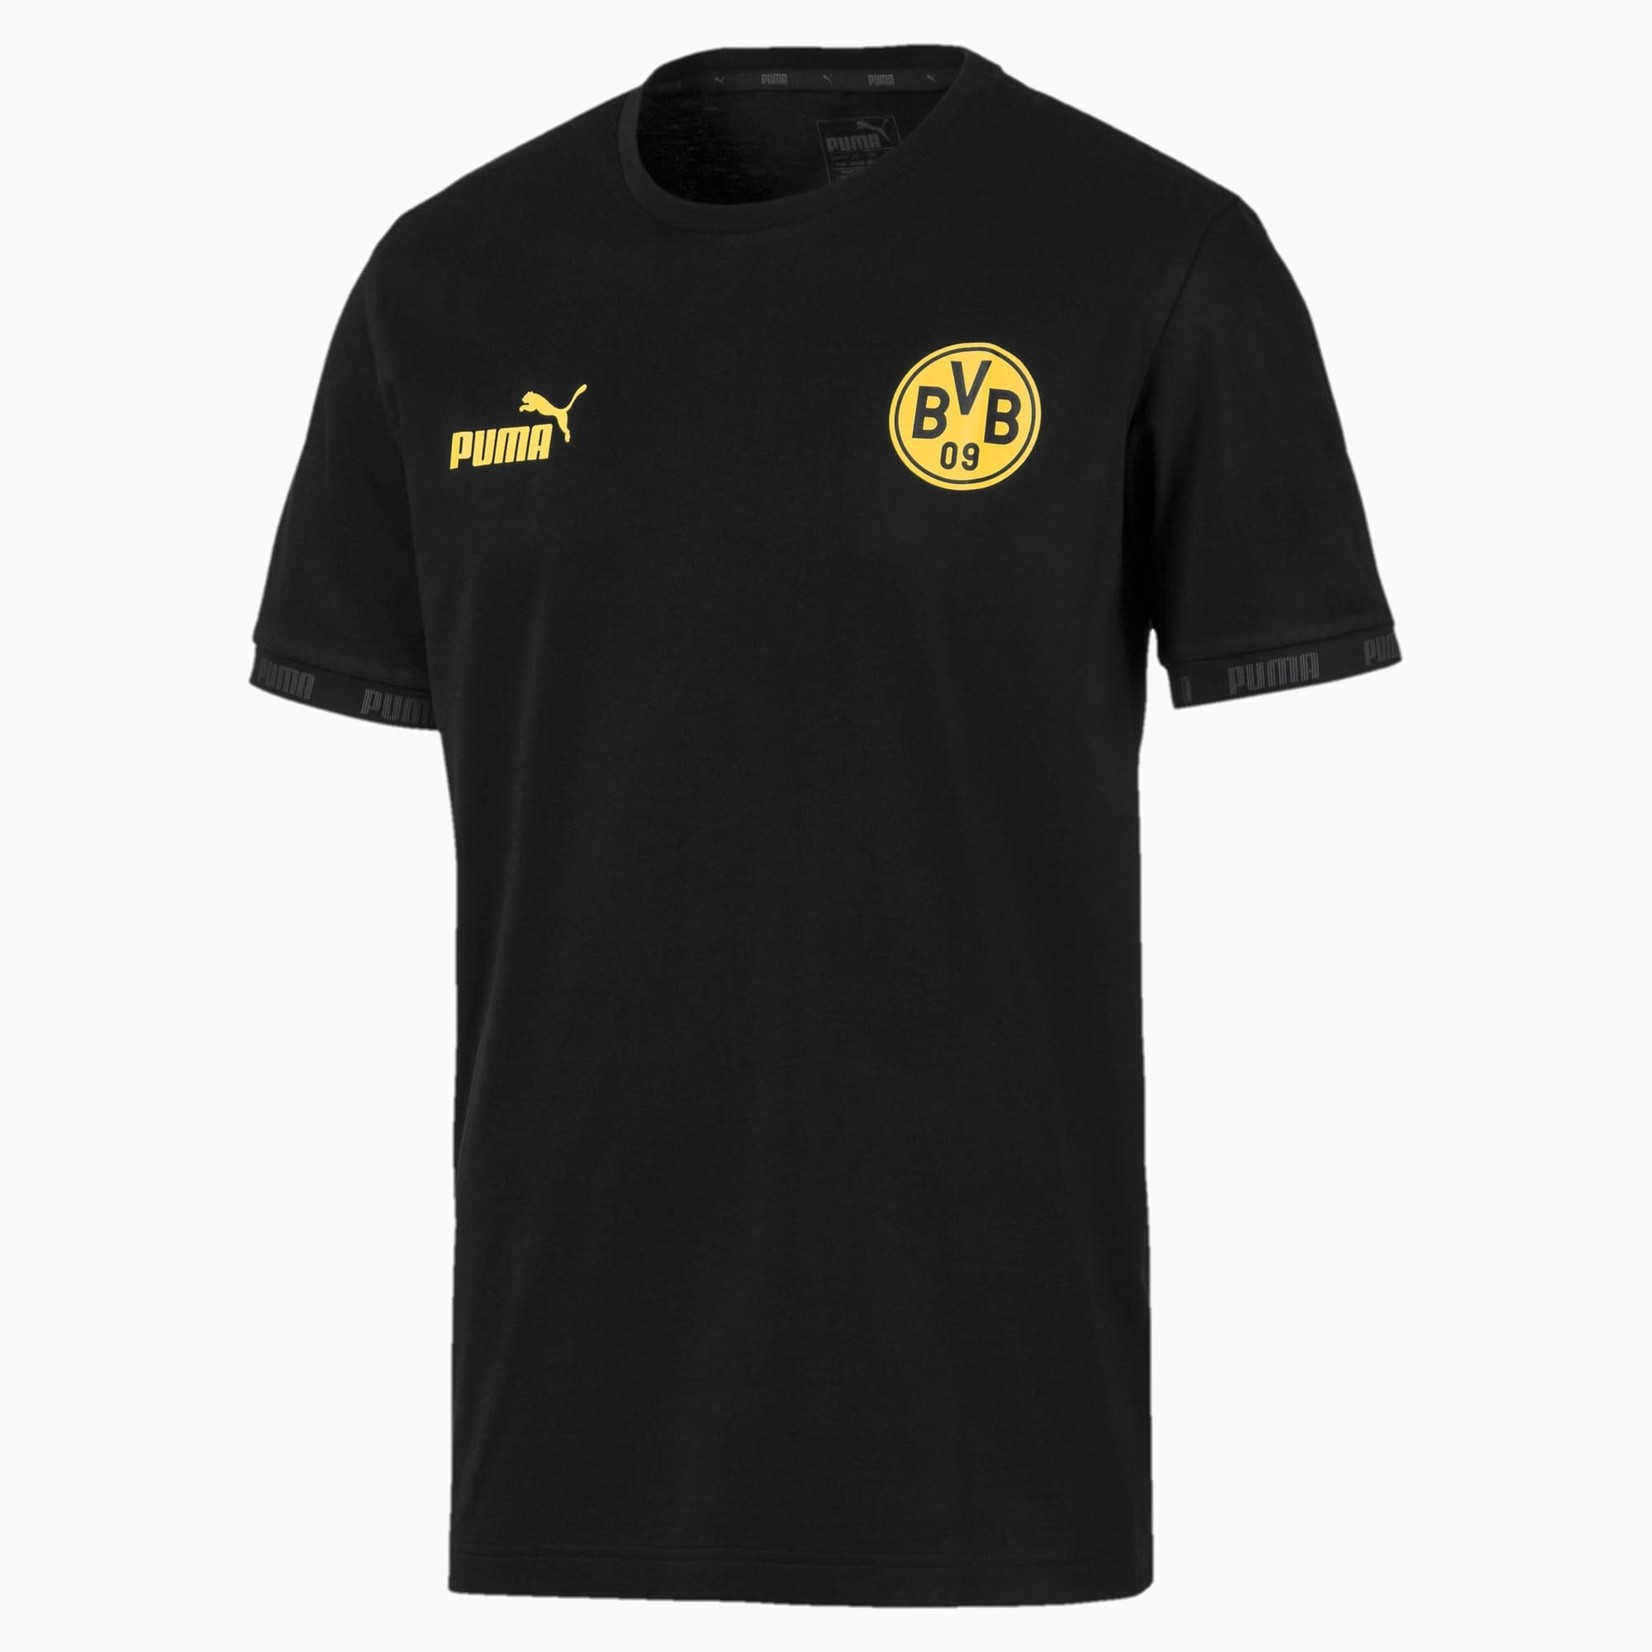 Puma Borussia Dortmund T-Shirt - 19/20 Away